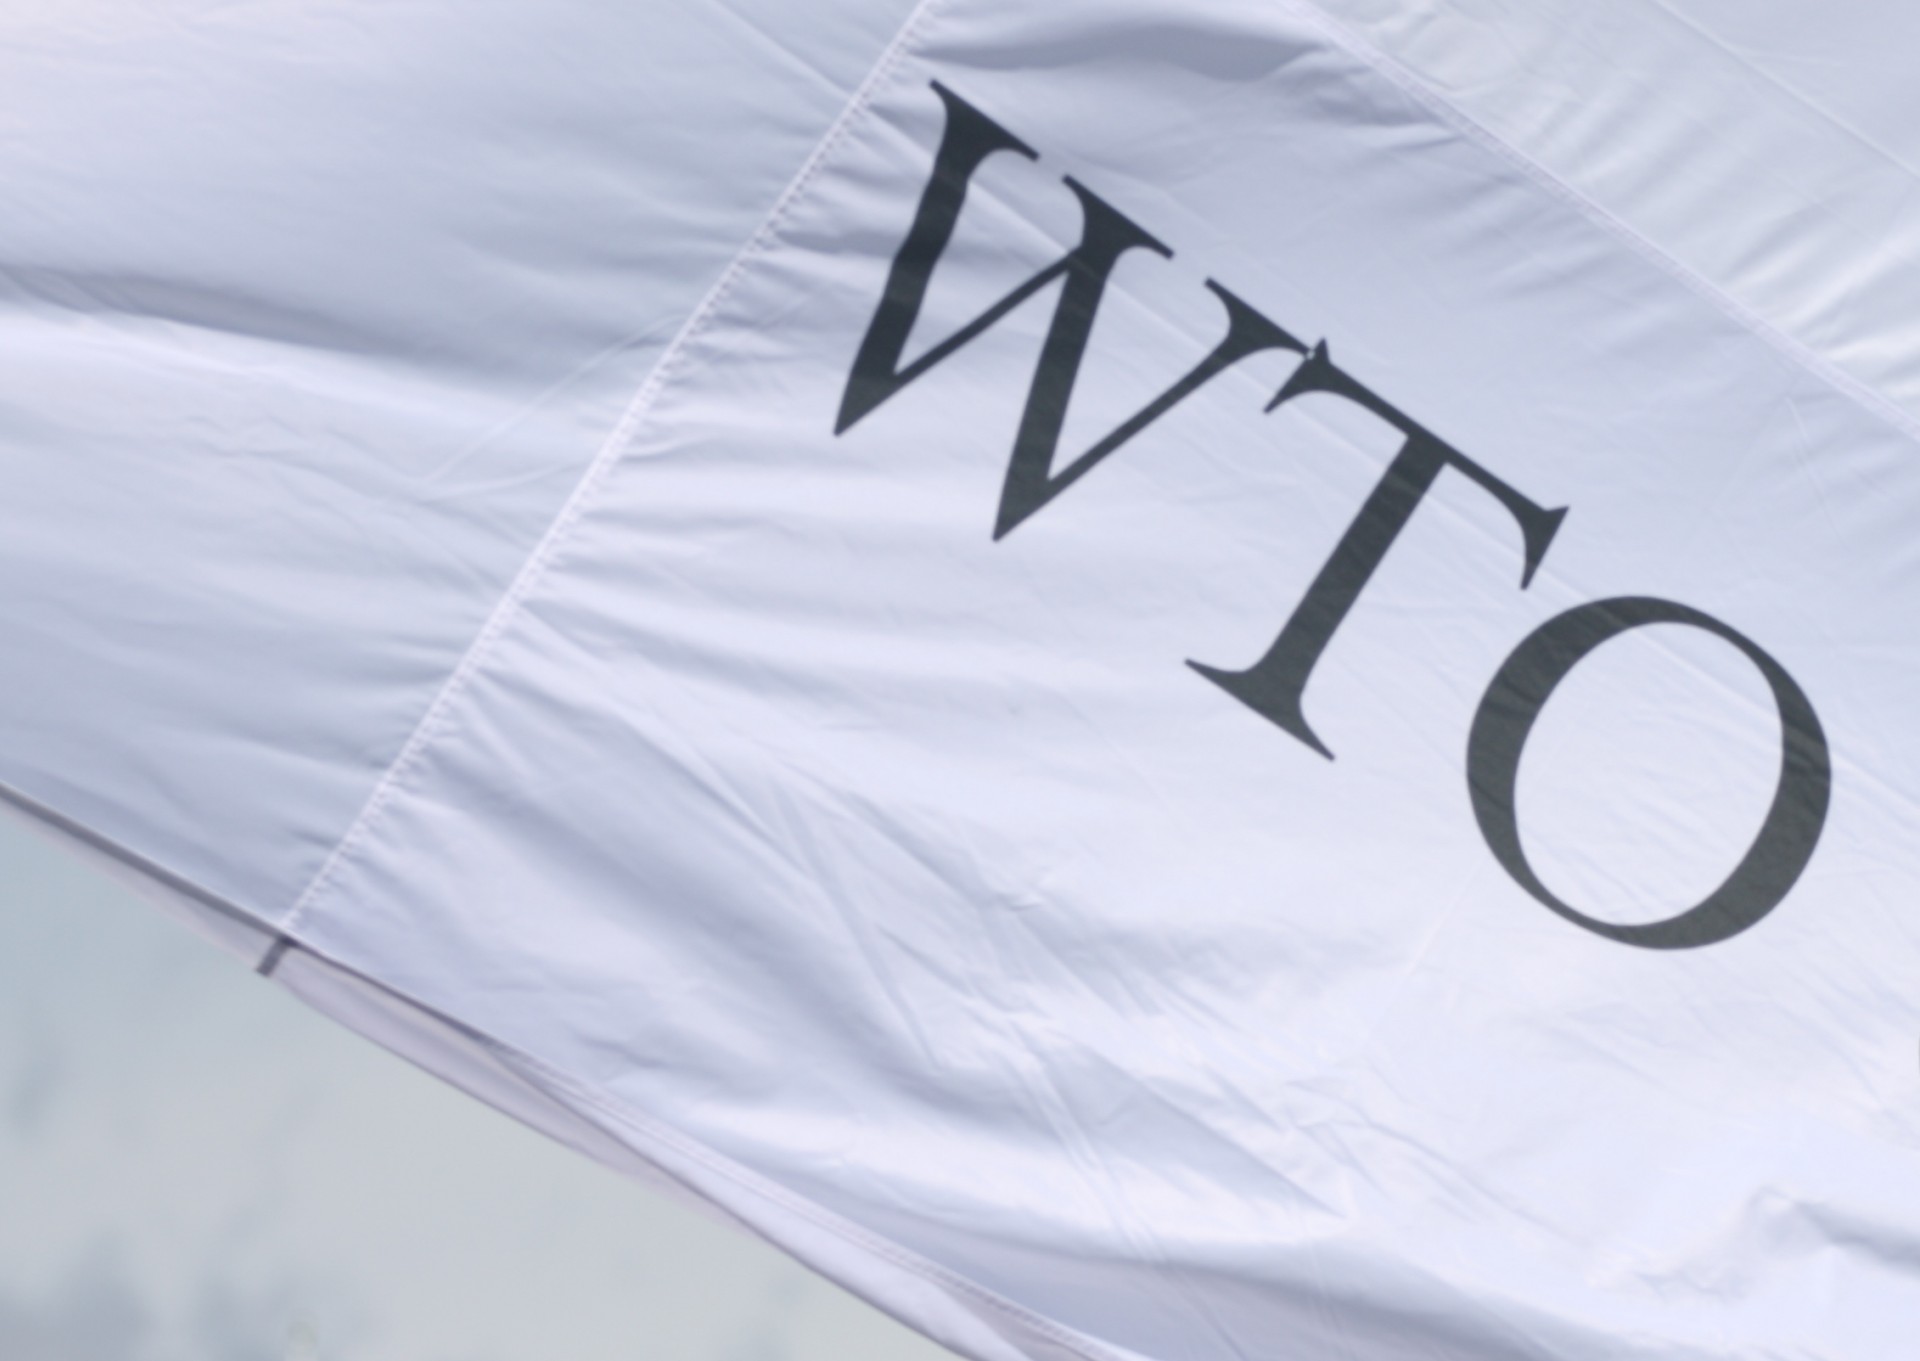 Foto: WTO/Flickr CC